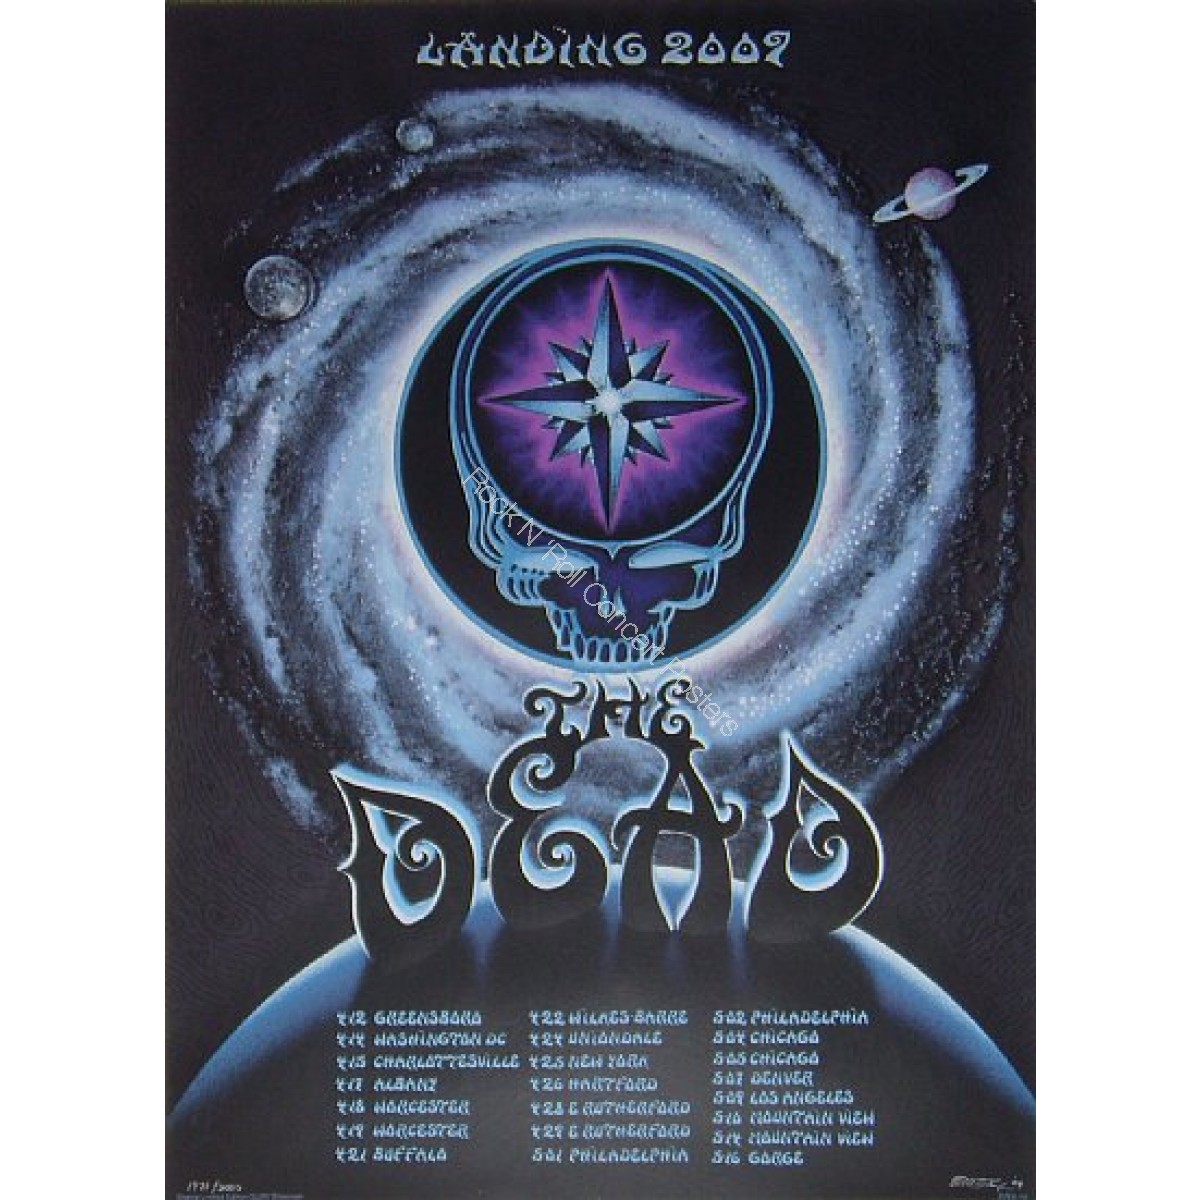 The Dead "Landing 2009" Official Tour Poster S/N 1st Edition Emek